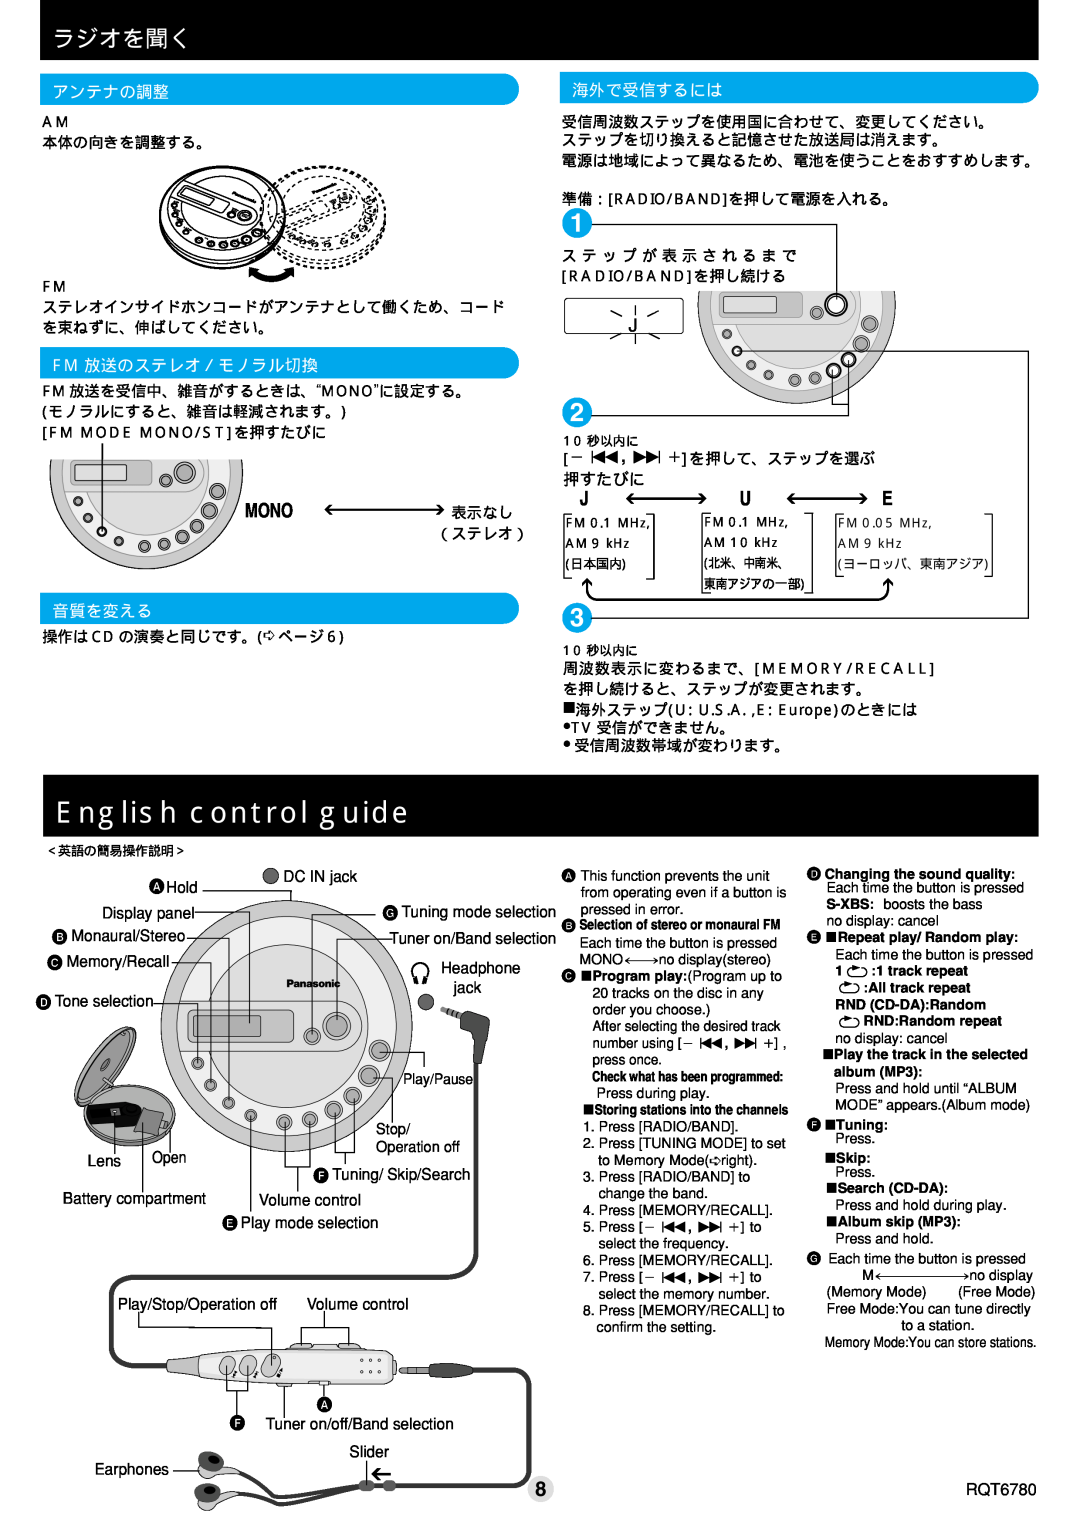 Sony SL-SV550 English control guide, Mono, アンテナの調整, 海外で受信するには, Fm 放送のステレオ／モノラル切換, 押すたびに, ラジオを聞く, J 1J0, 音質を変える 